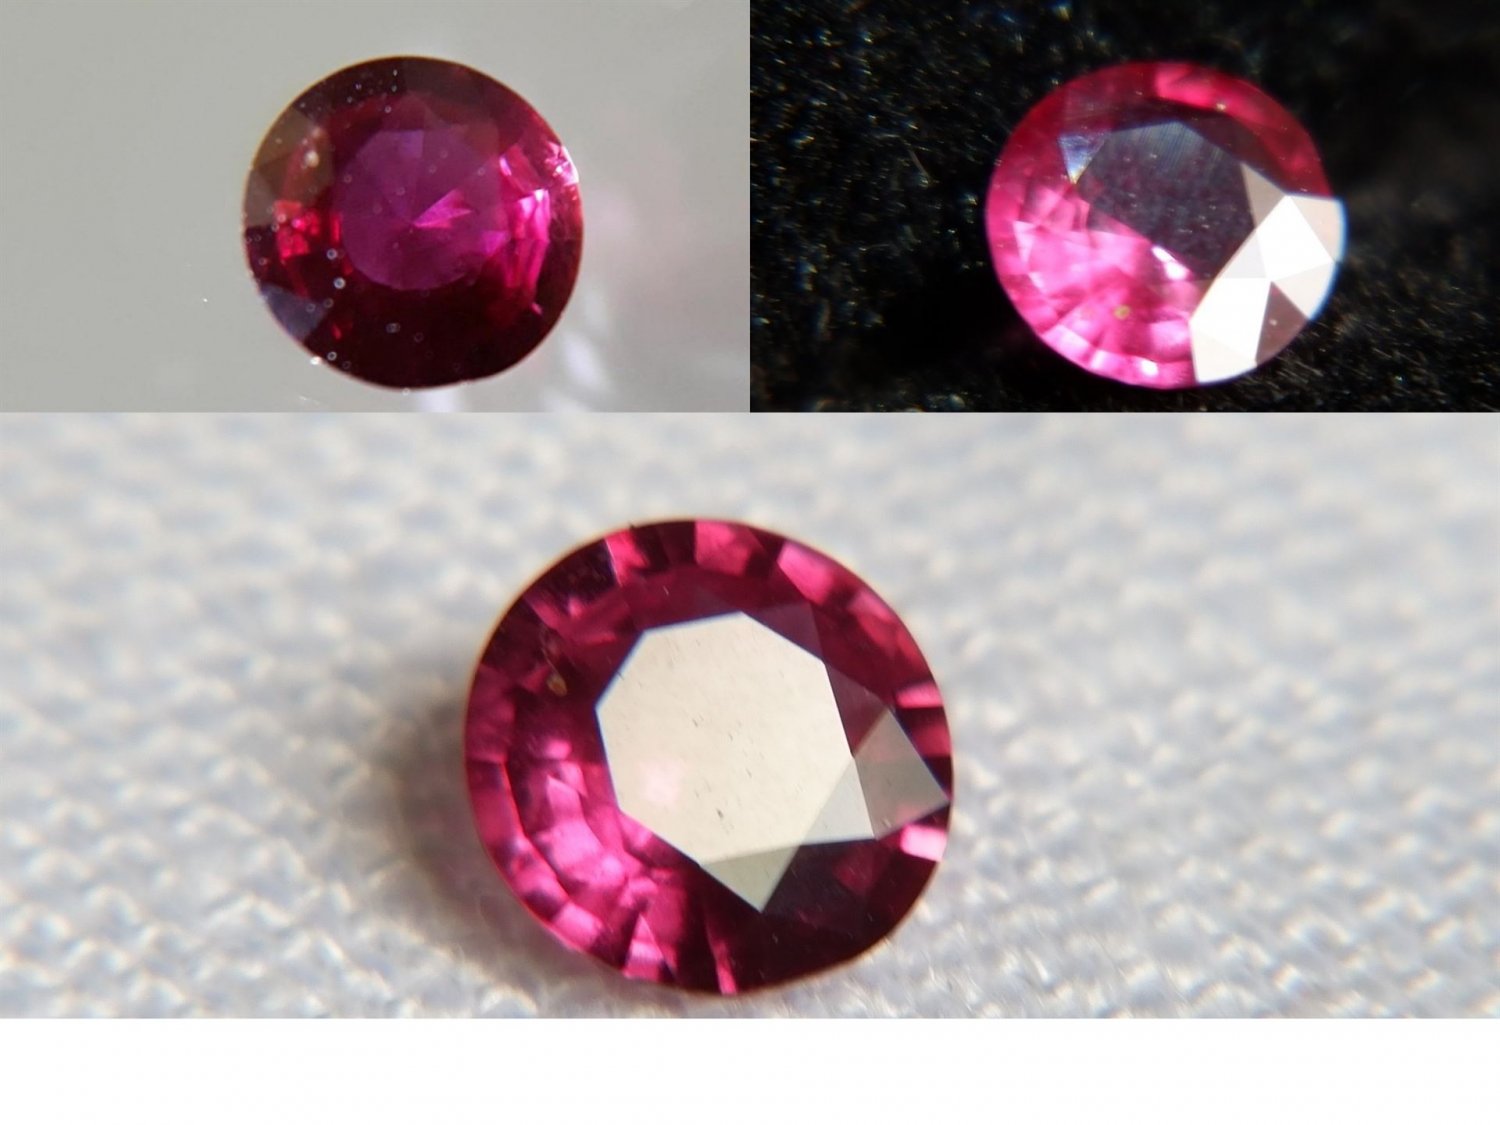 0.51 ct GIA purplish pink Sapphire/Ruby, unheated| GIA Premium handcrafted round cut Sri Lanka